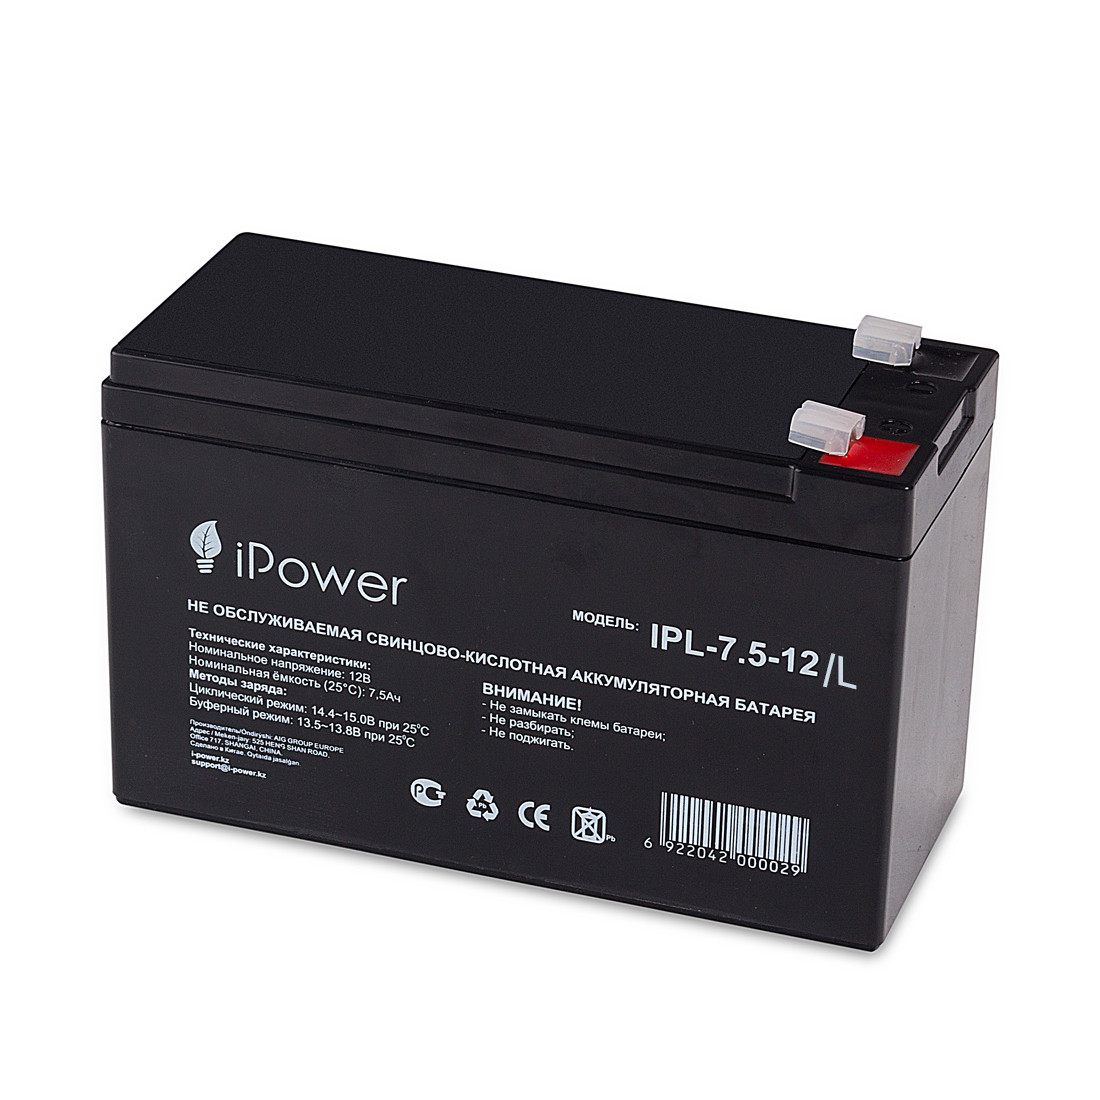 Батарея  IPower  IPL7.5-12/L  Свинцово-кислотная 12В 7.5 Ач  Размер в мм.: 95*151*65